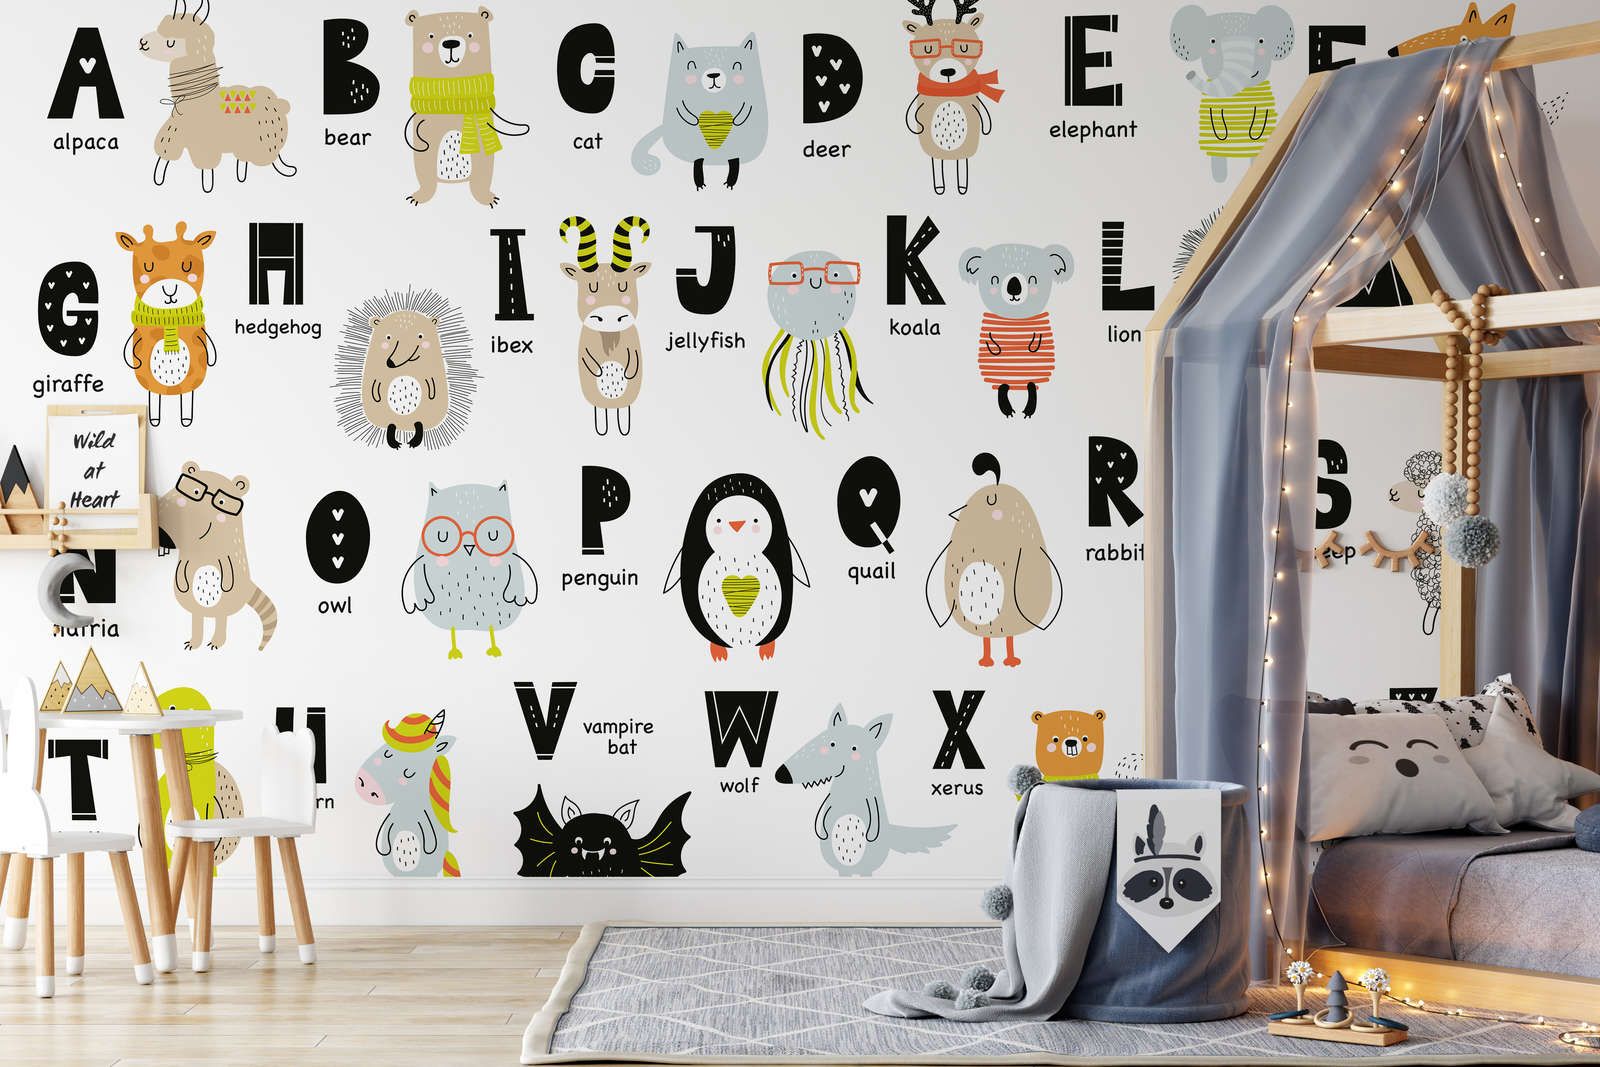             Photo wallpaper Alphabet with animals and animal names - Smooth & matt non-woven
        